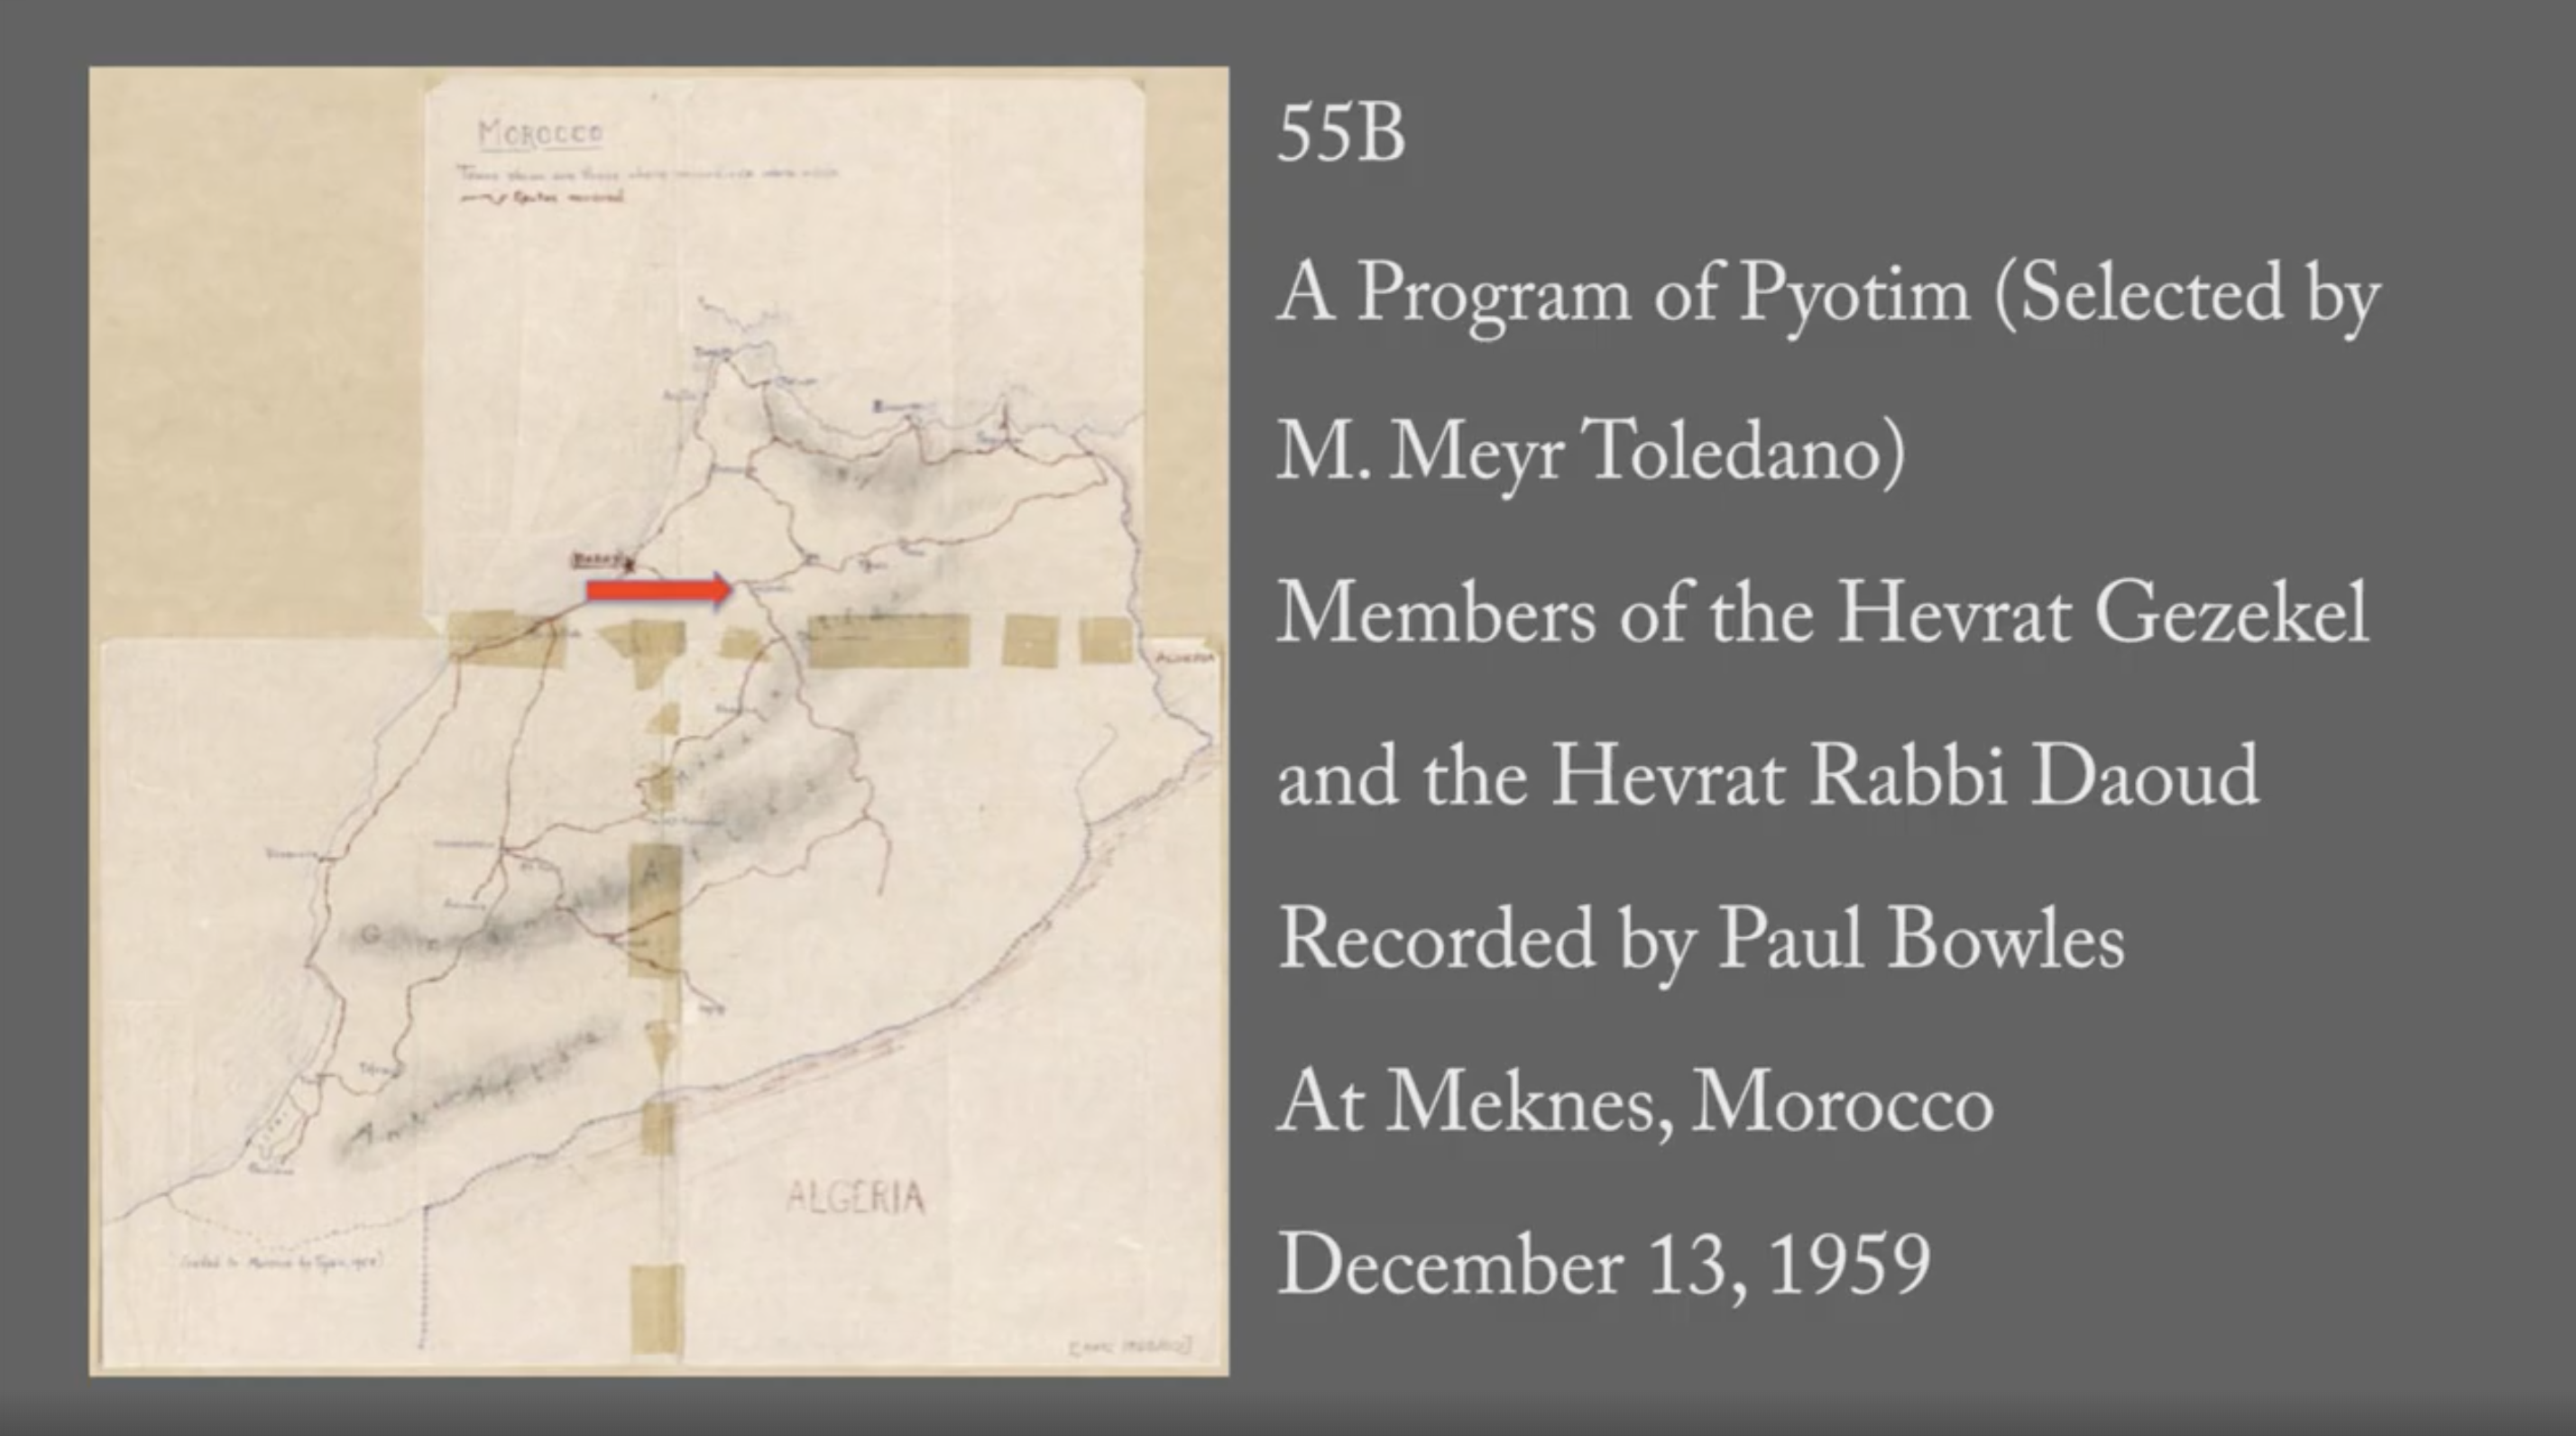 Talmud Torah School - 55B: "A Program of Pyotim (continued)"